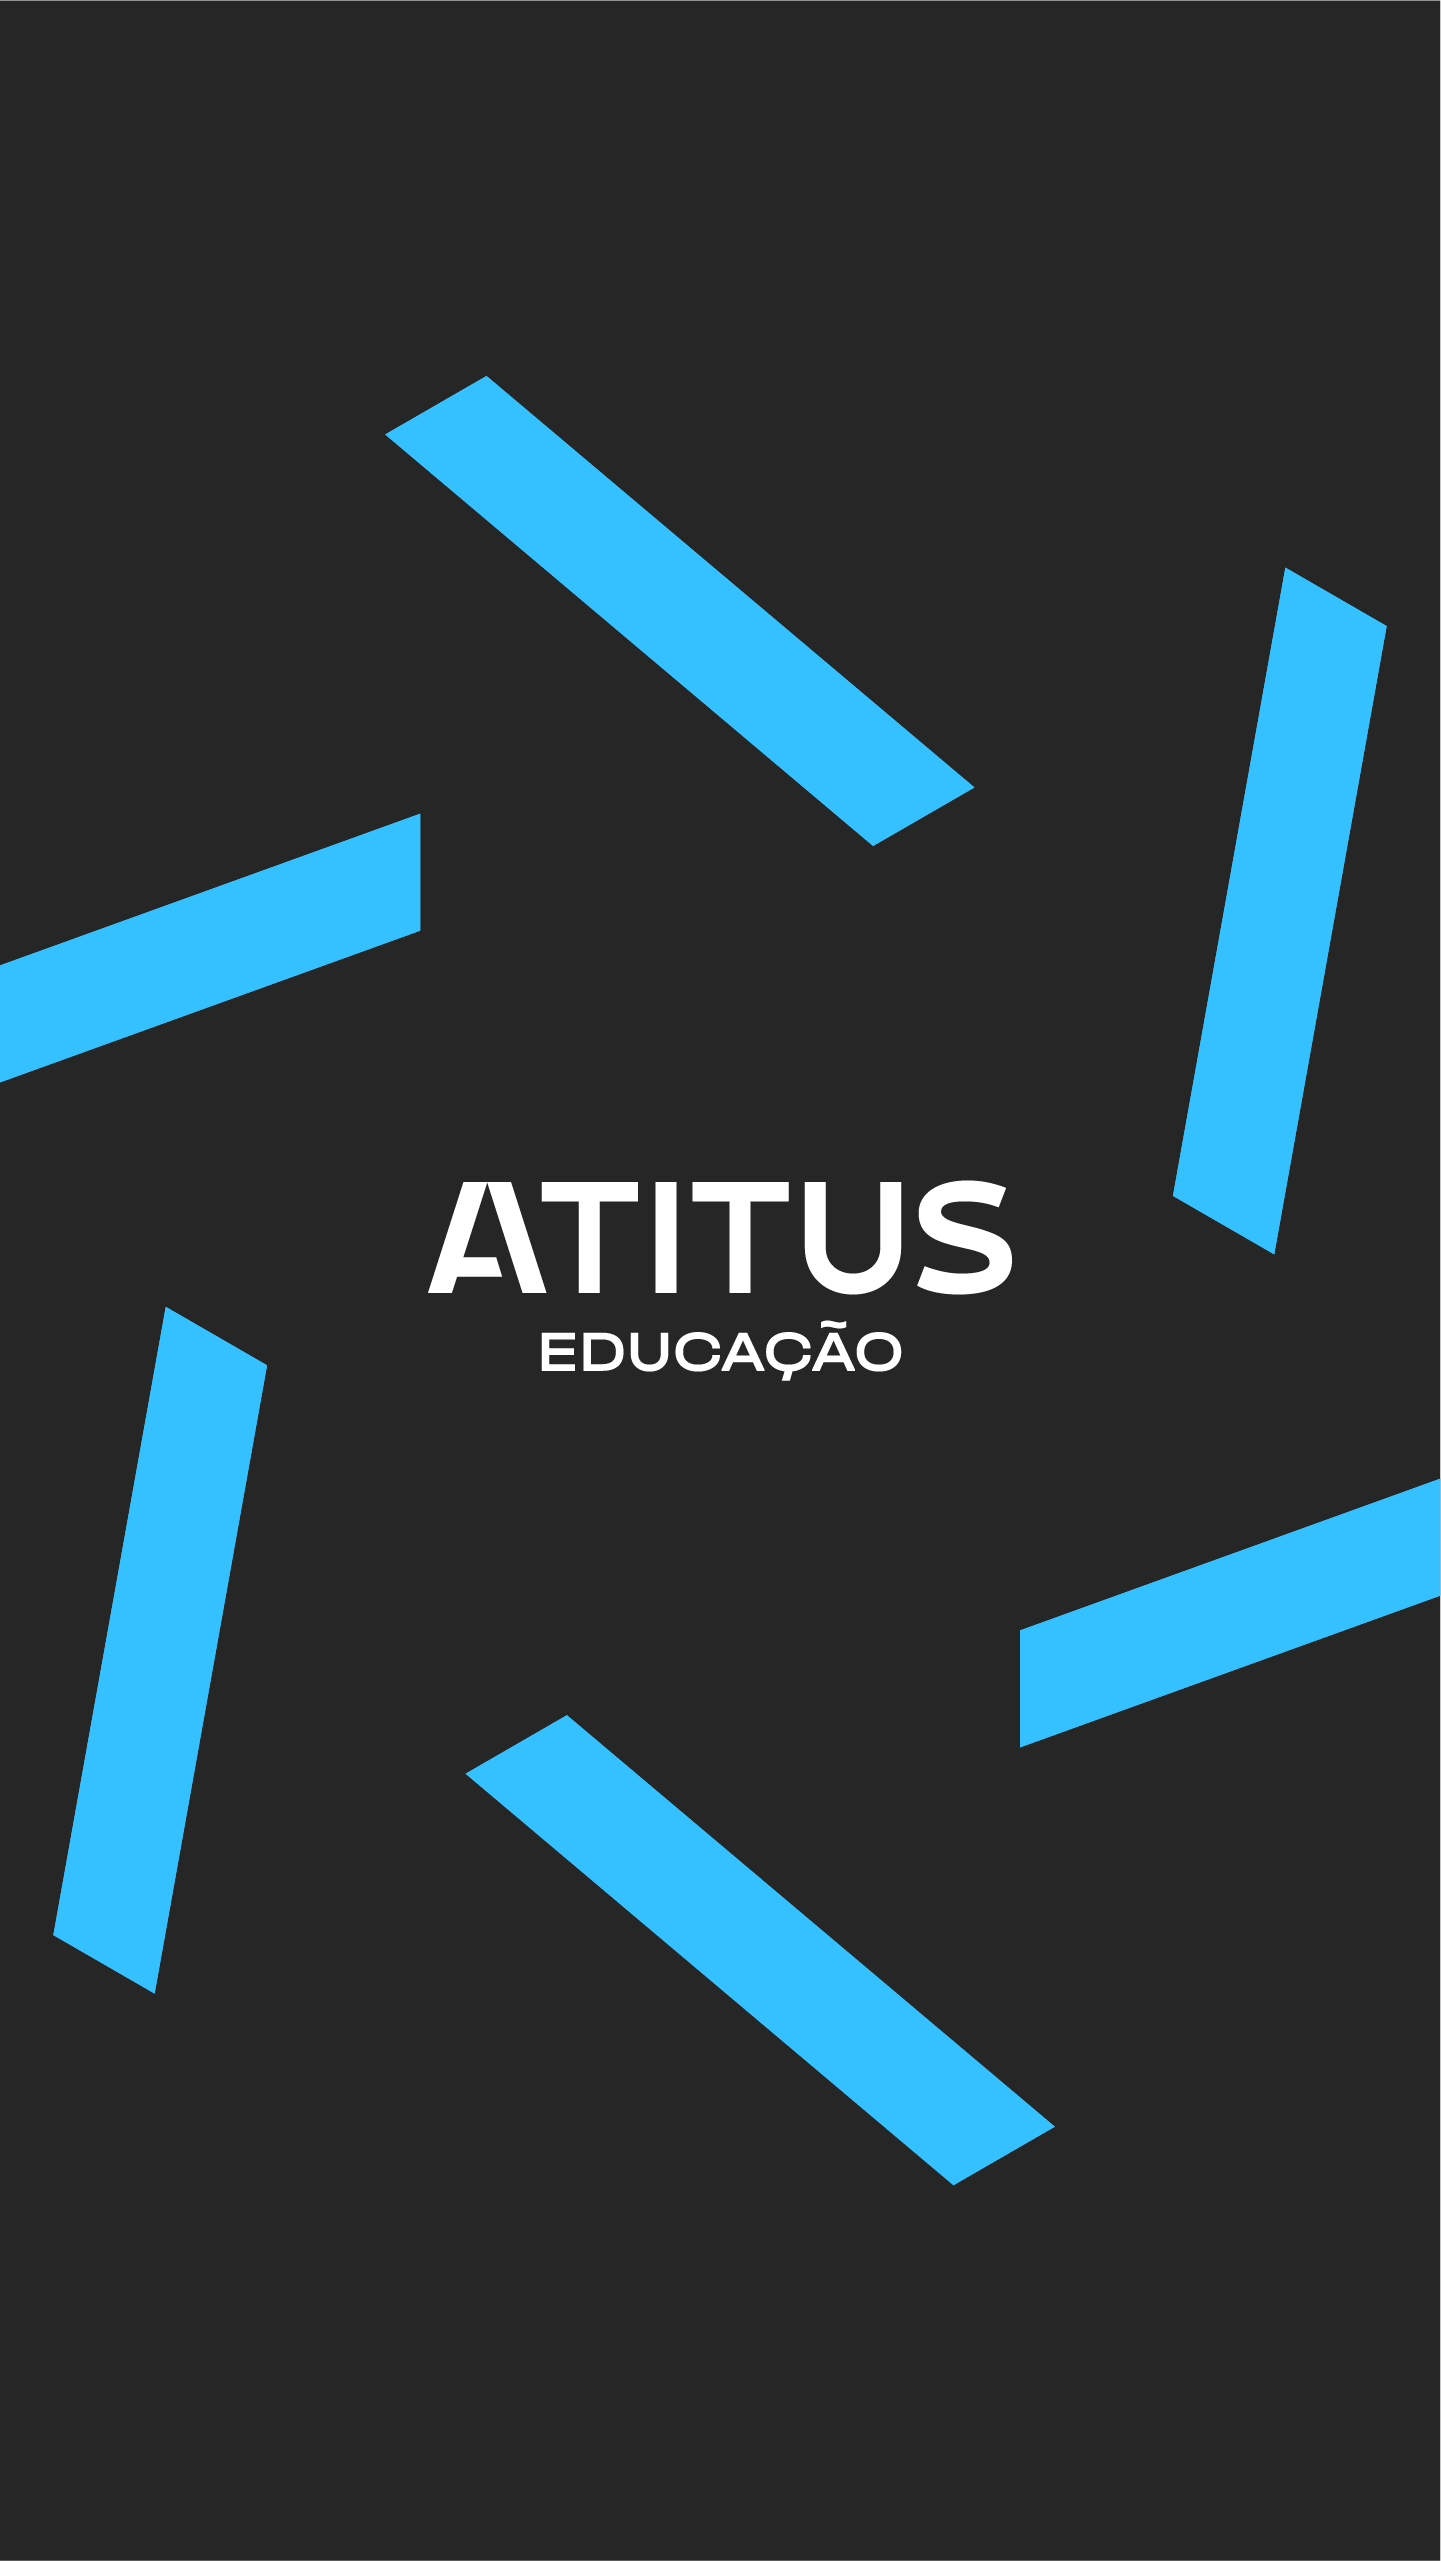 Atitus Education – Autonomy to live the future